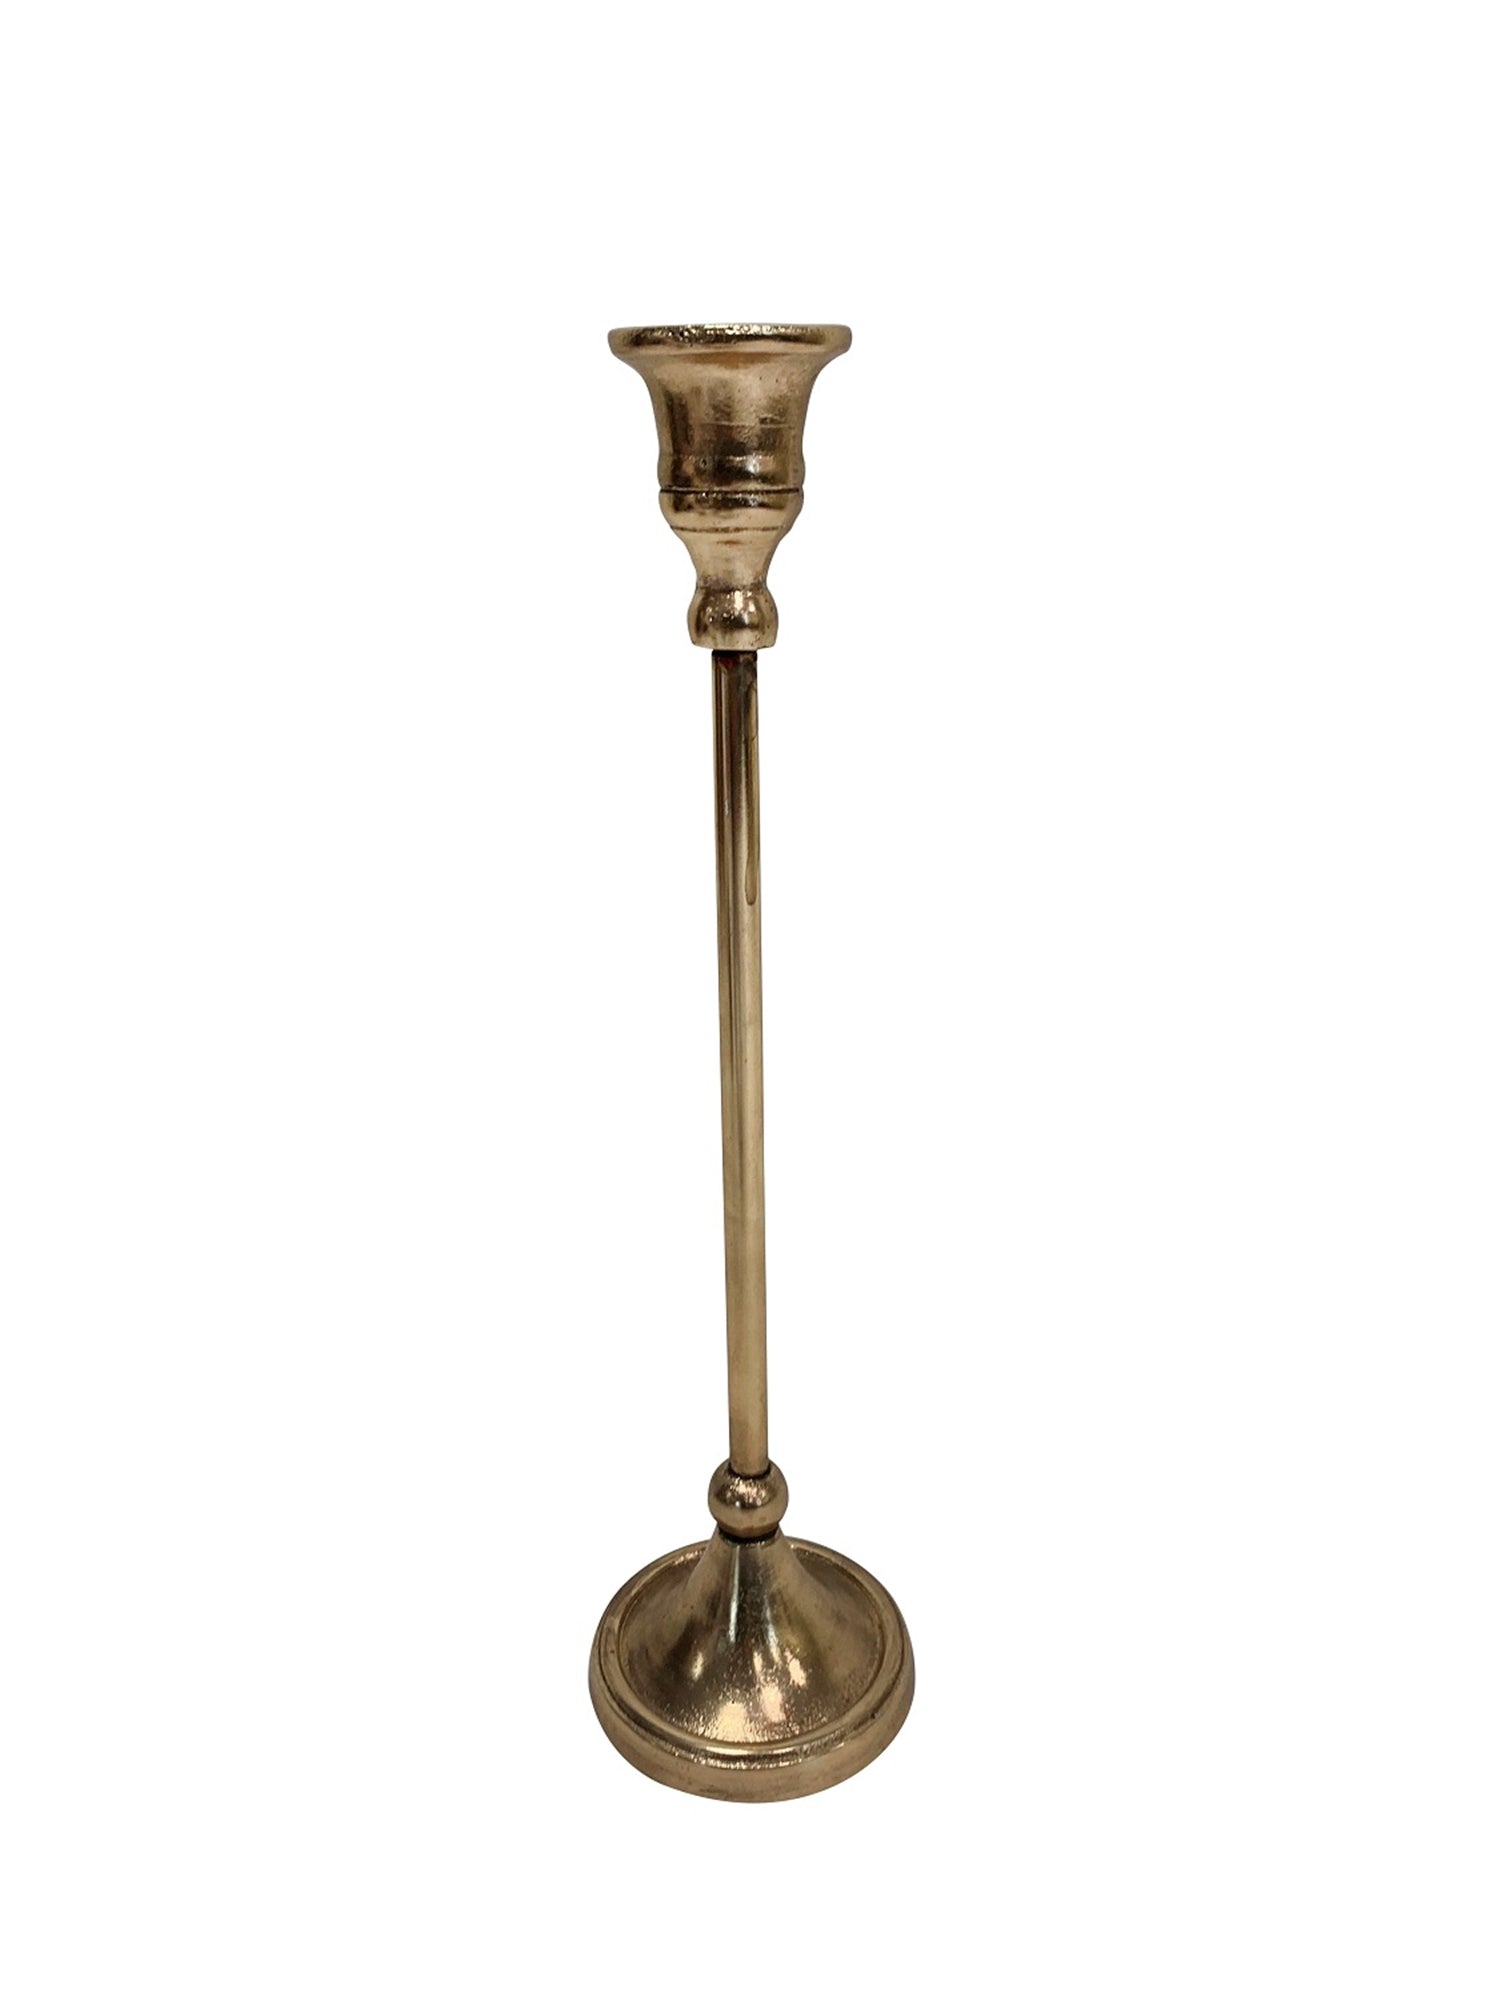 Lg. Alum. Candlestick Antique Brass Finish - Brass Antique